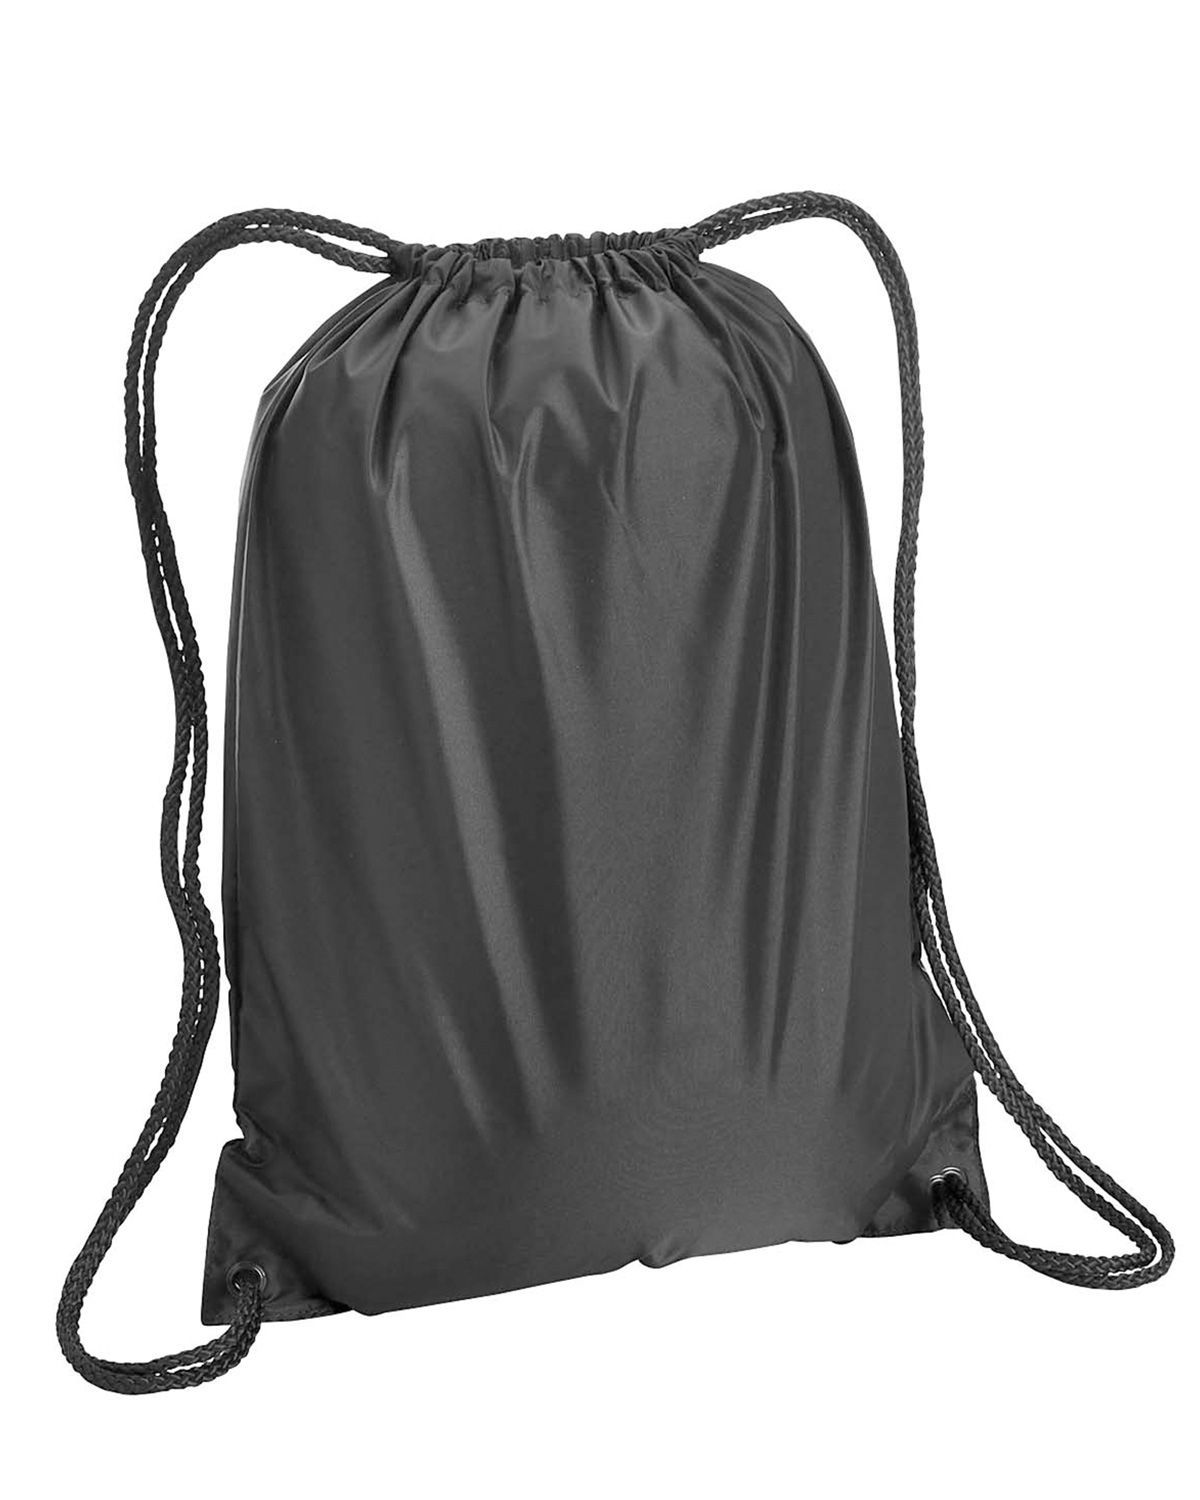 Liberty Bags 8881 Sport Pack - ApparelnBags.com